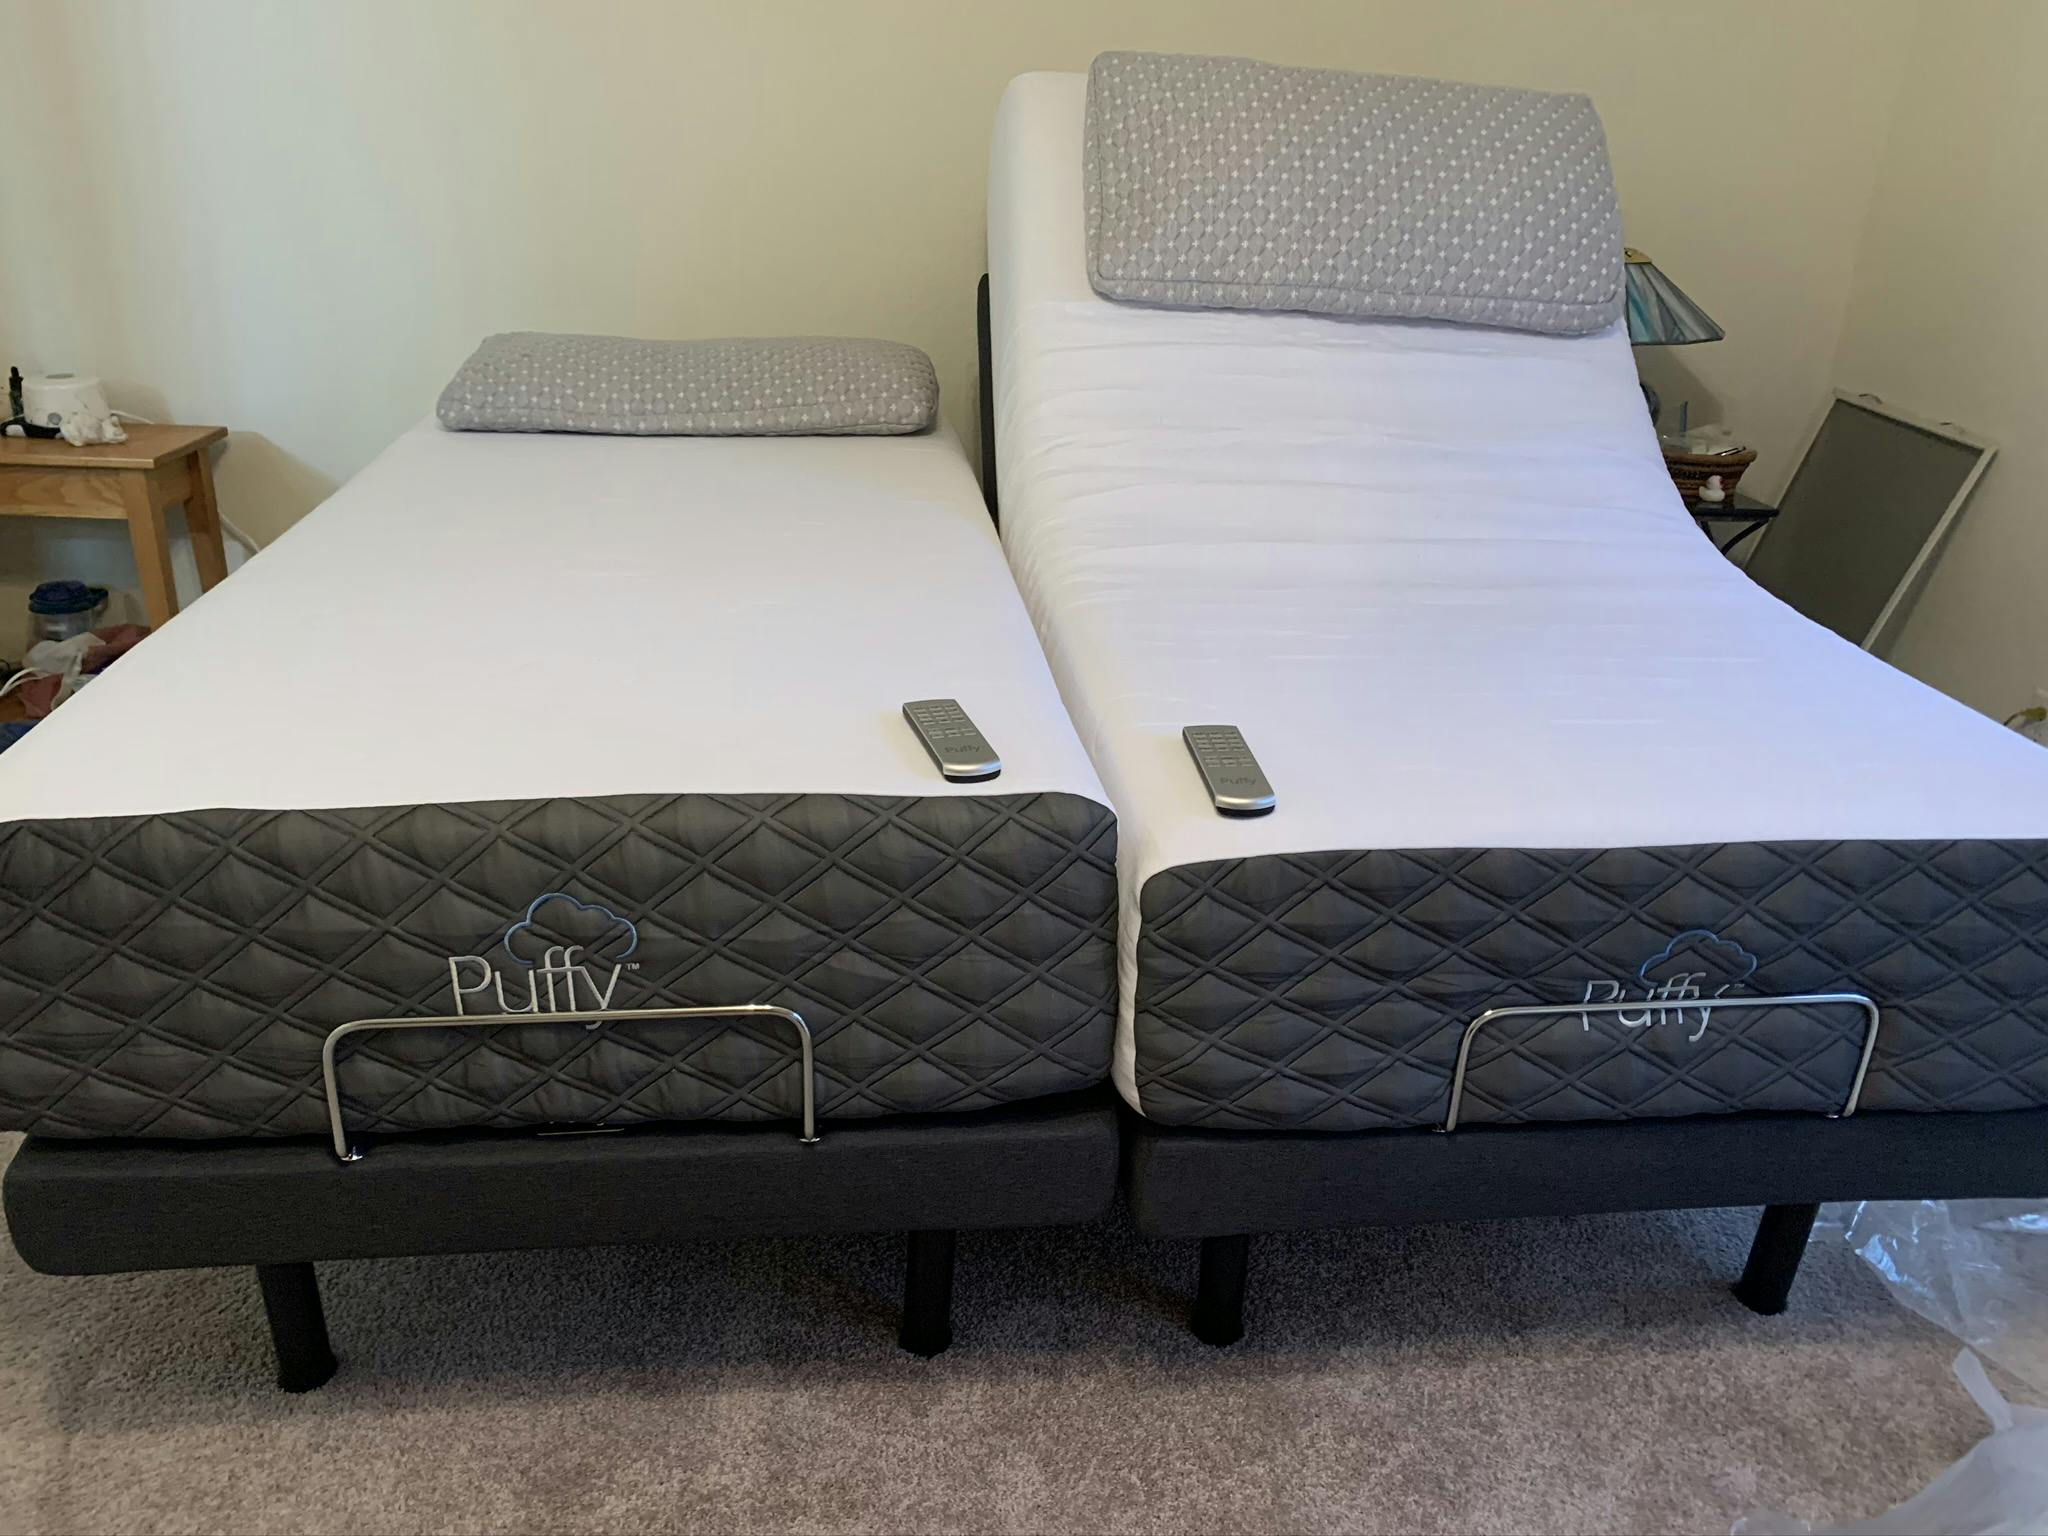 king size bed mattress puffy